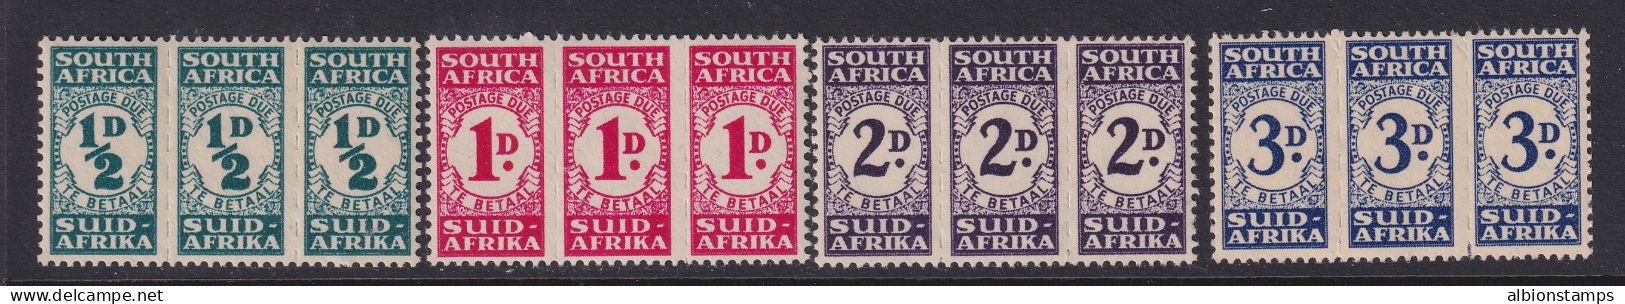 South Africa, Scott J30-J33 (SG D30-D33), MNH - Postage Due